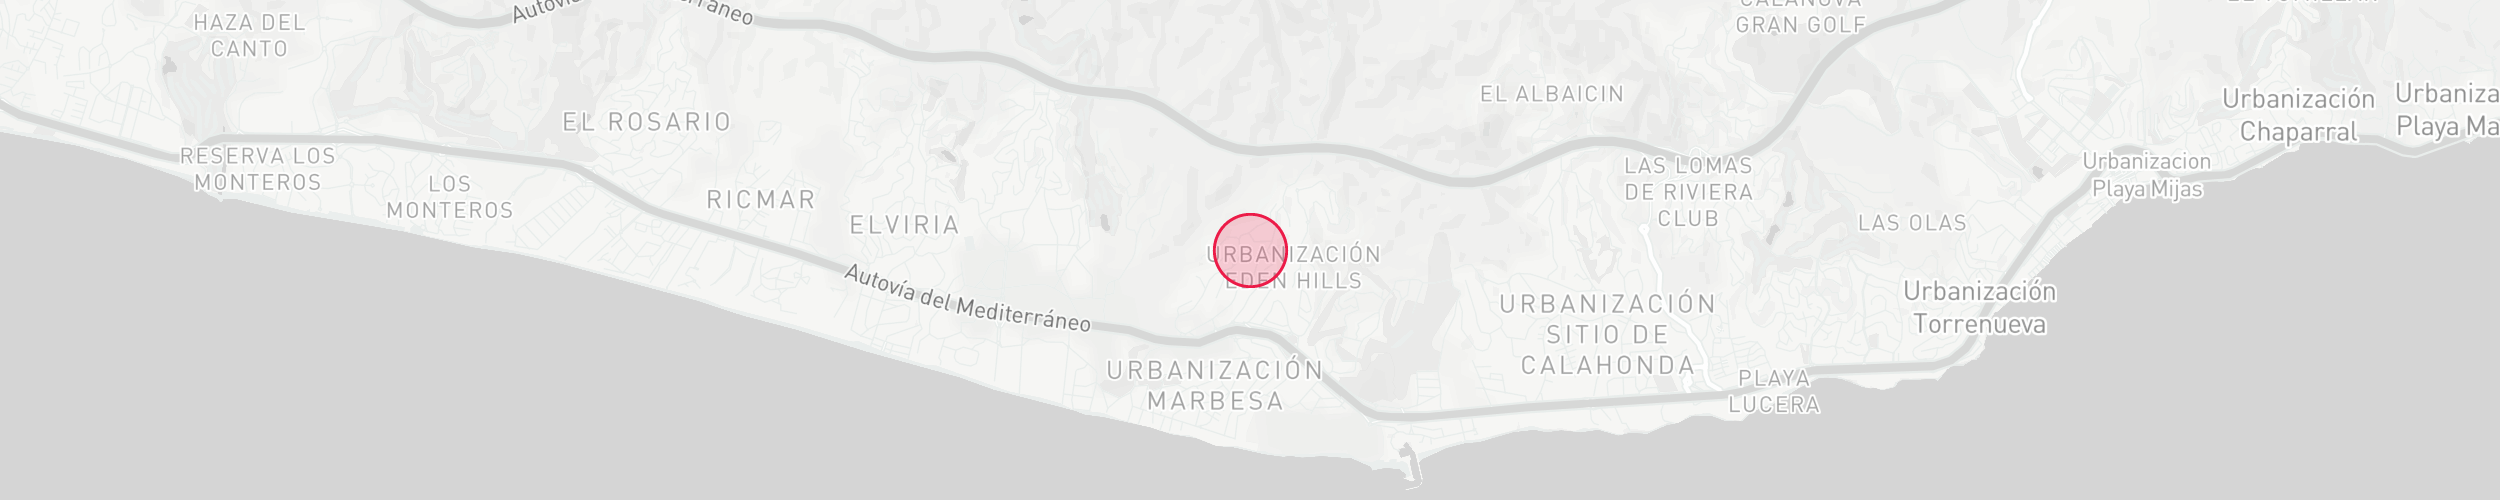 Plan de localisation de propriétés - Hacienda las Chapas